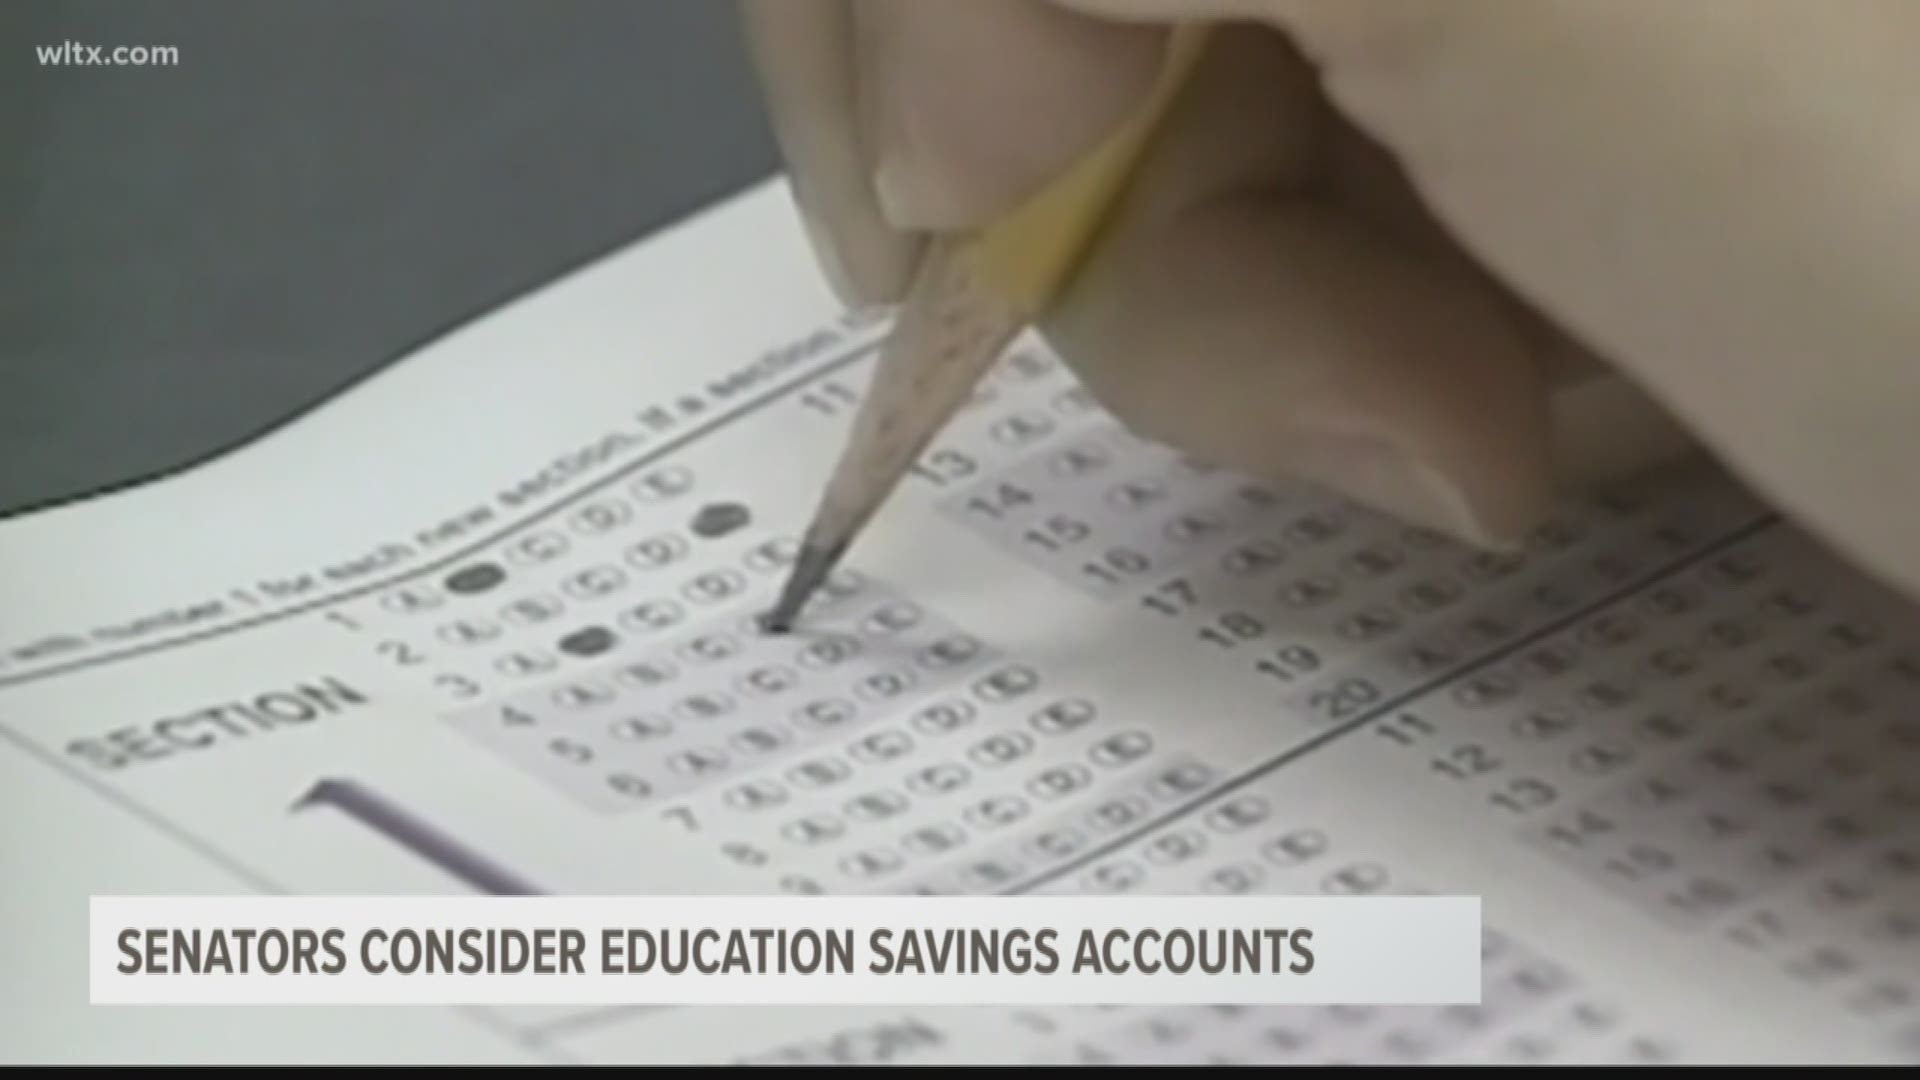 The South Carolina Senate is considering an education savings account bill.